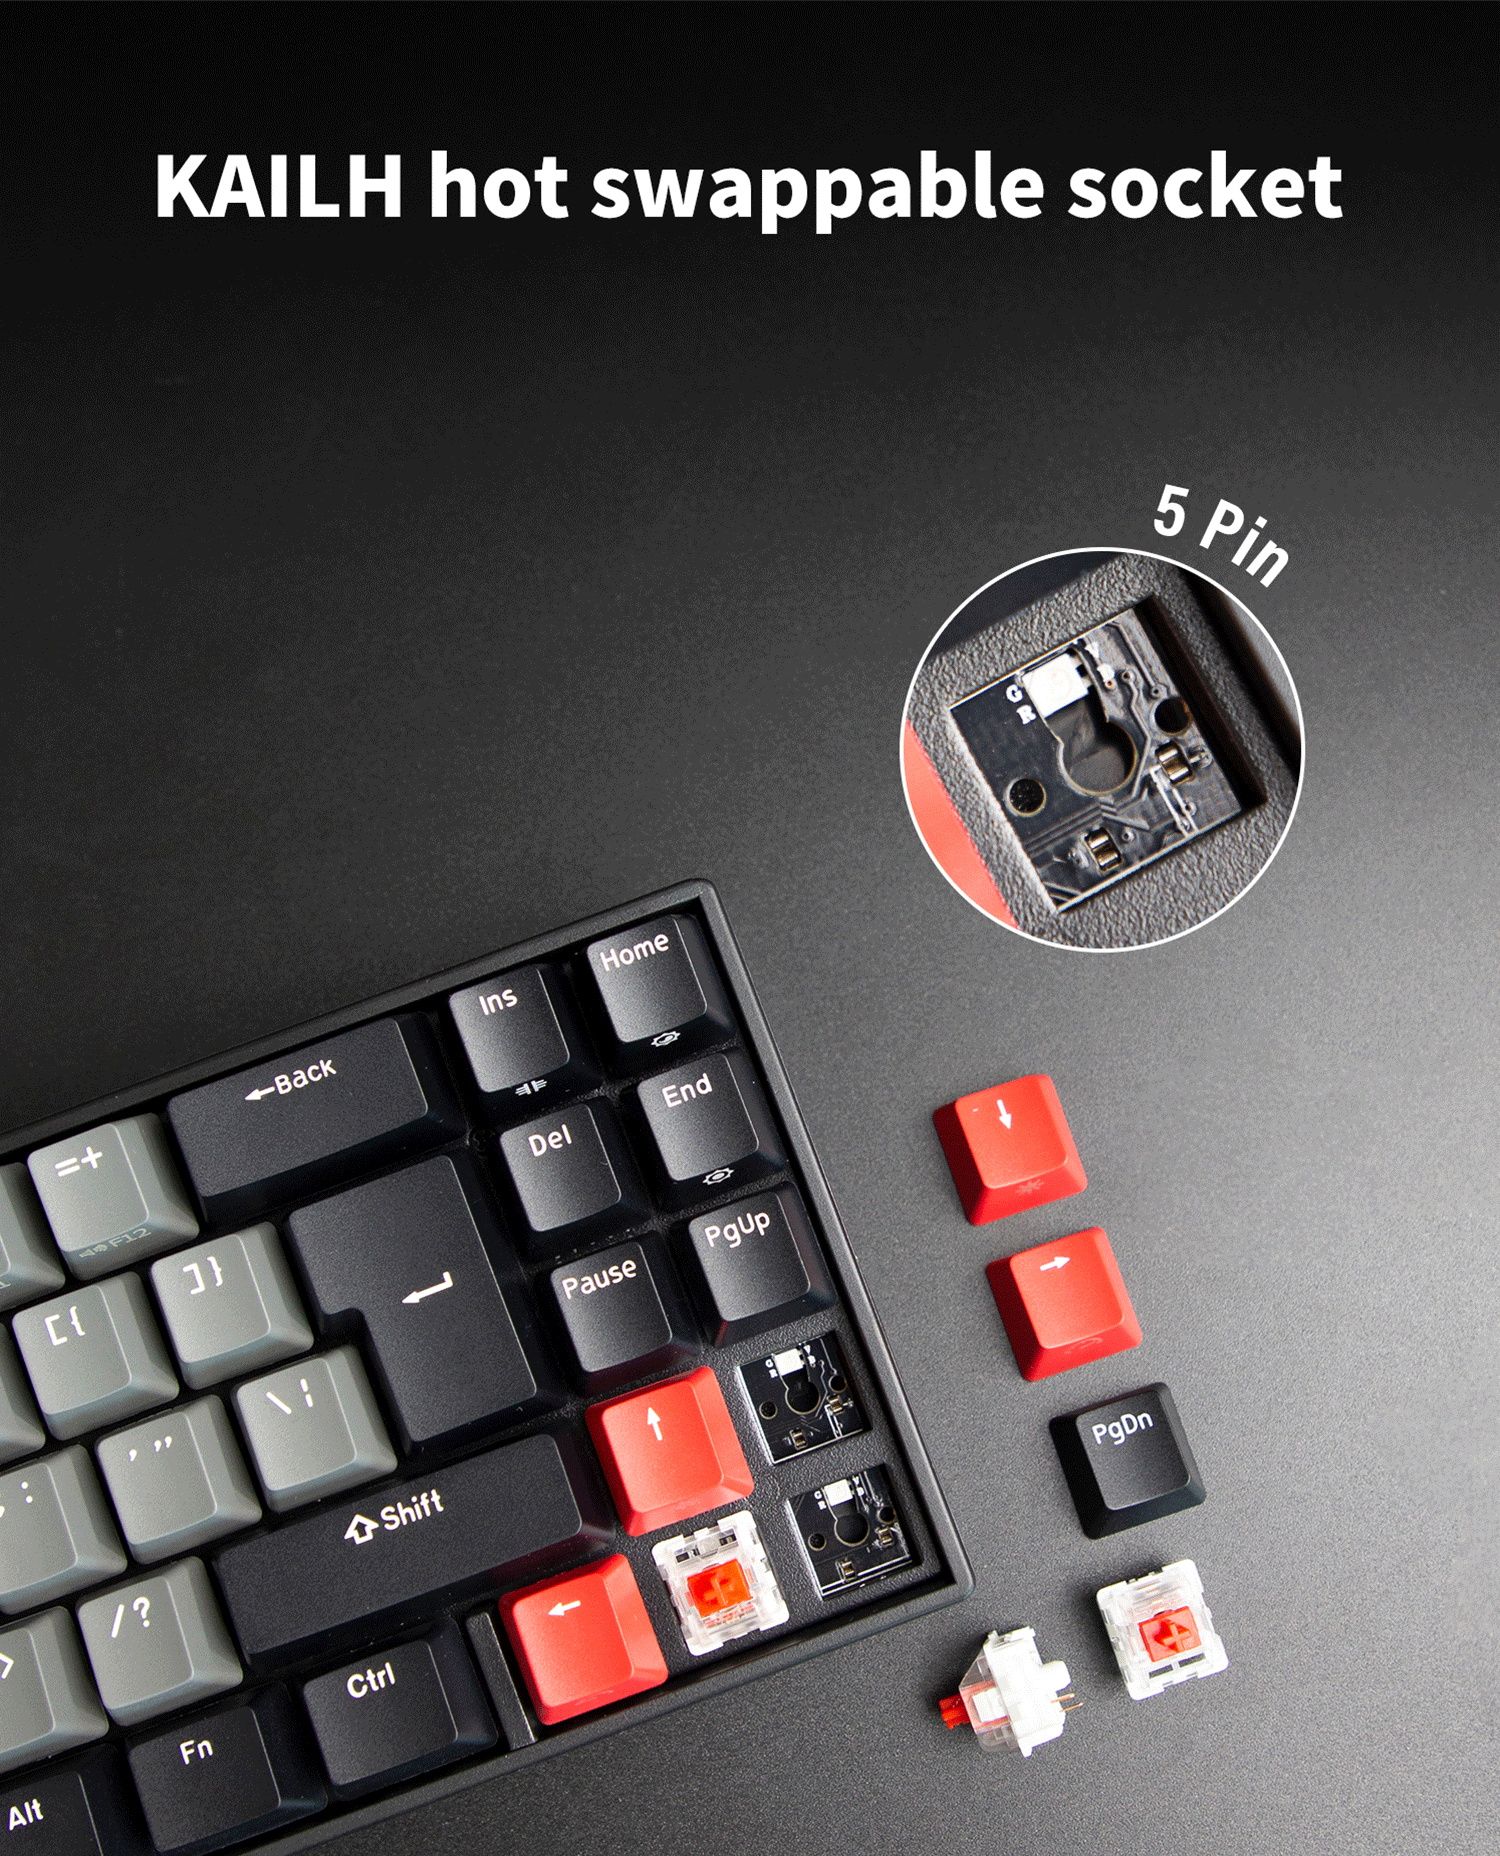 ROYAL KLUDGE Mechanisch, Tastatur, Gaming Sonstiges RK71 ISO Mode 2,4ghz, Dual